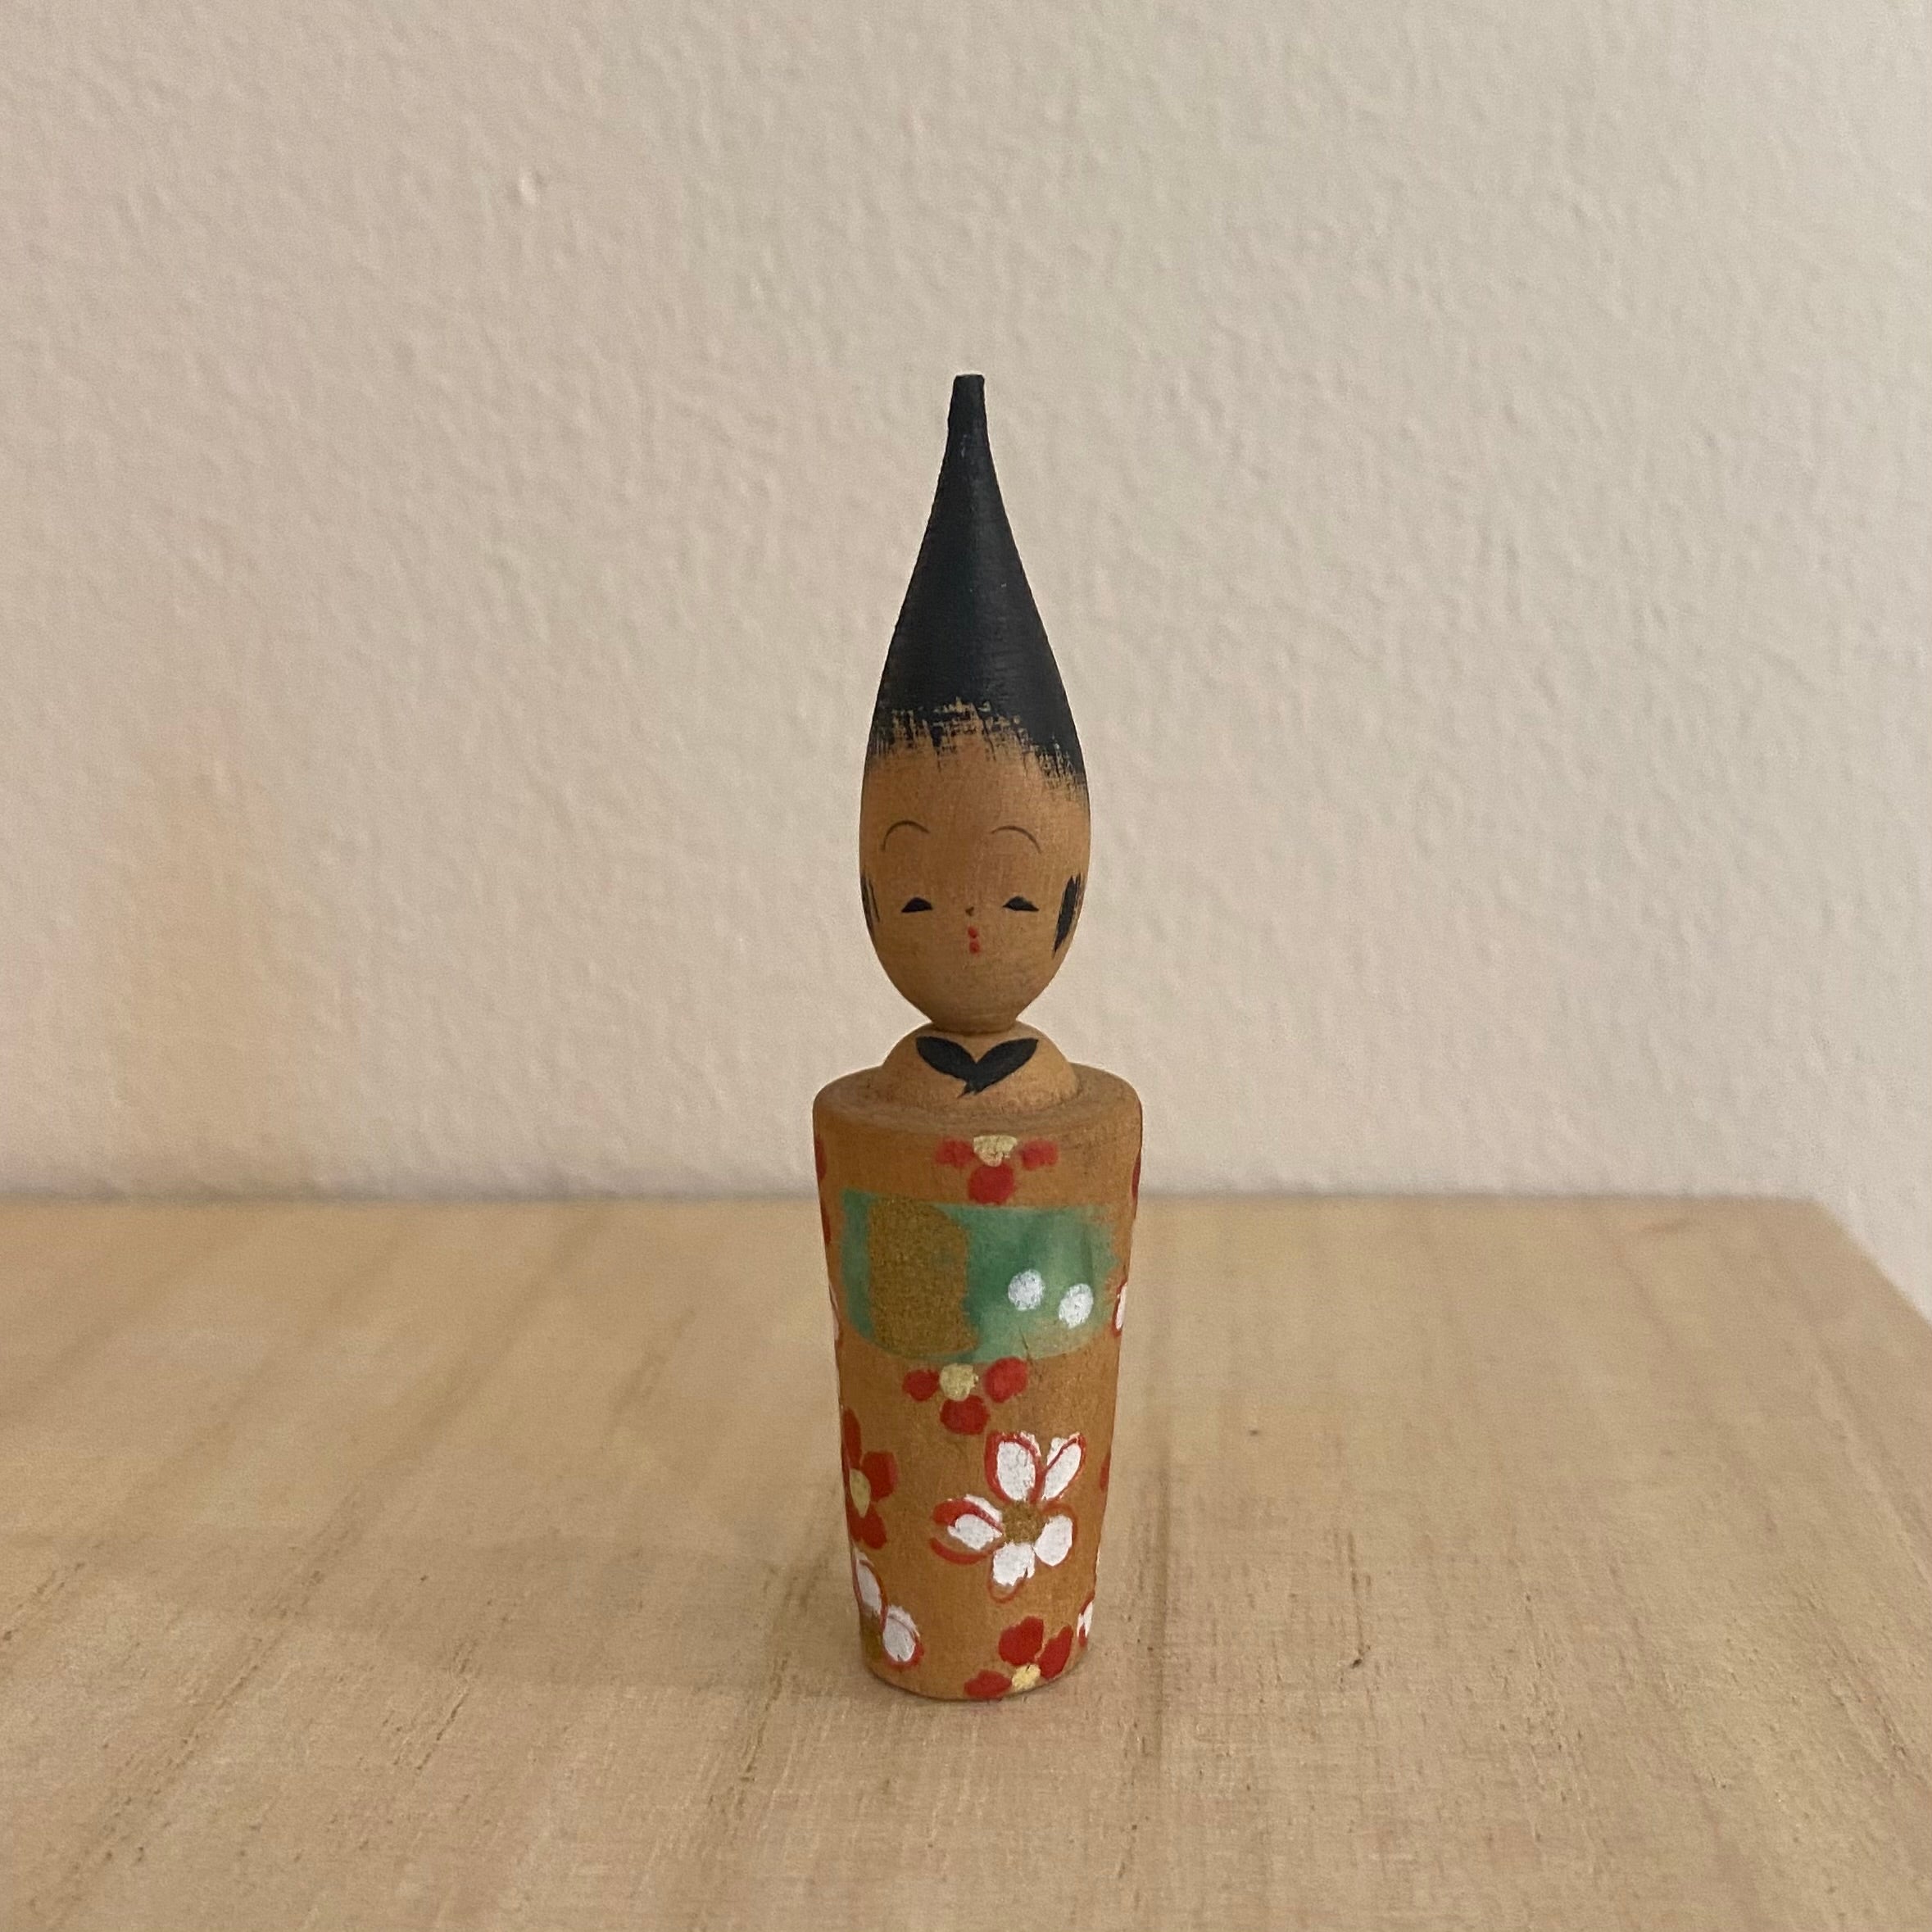 Small unique wooden figurines